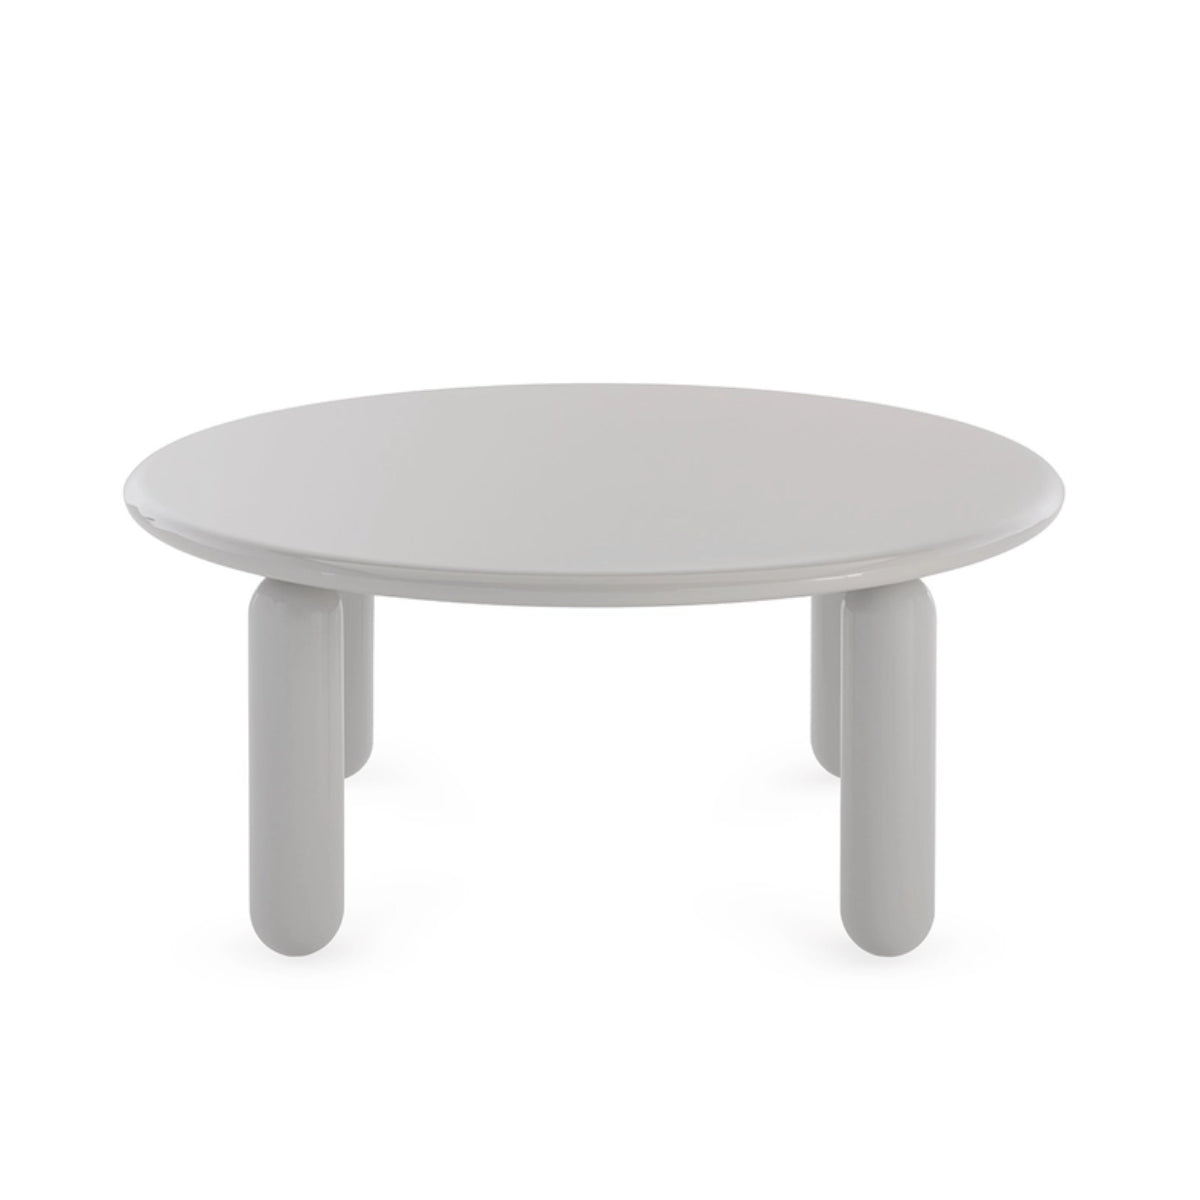 Undique Mas Table Medium - Kartell